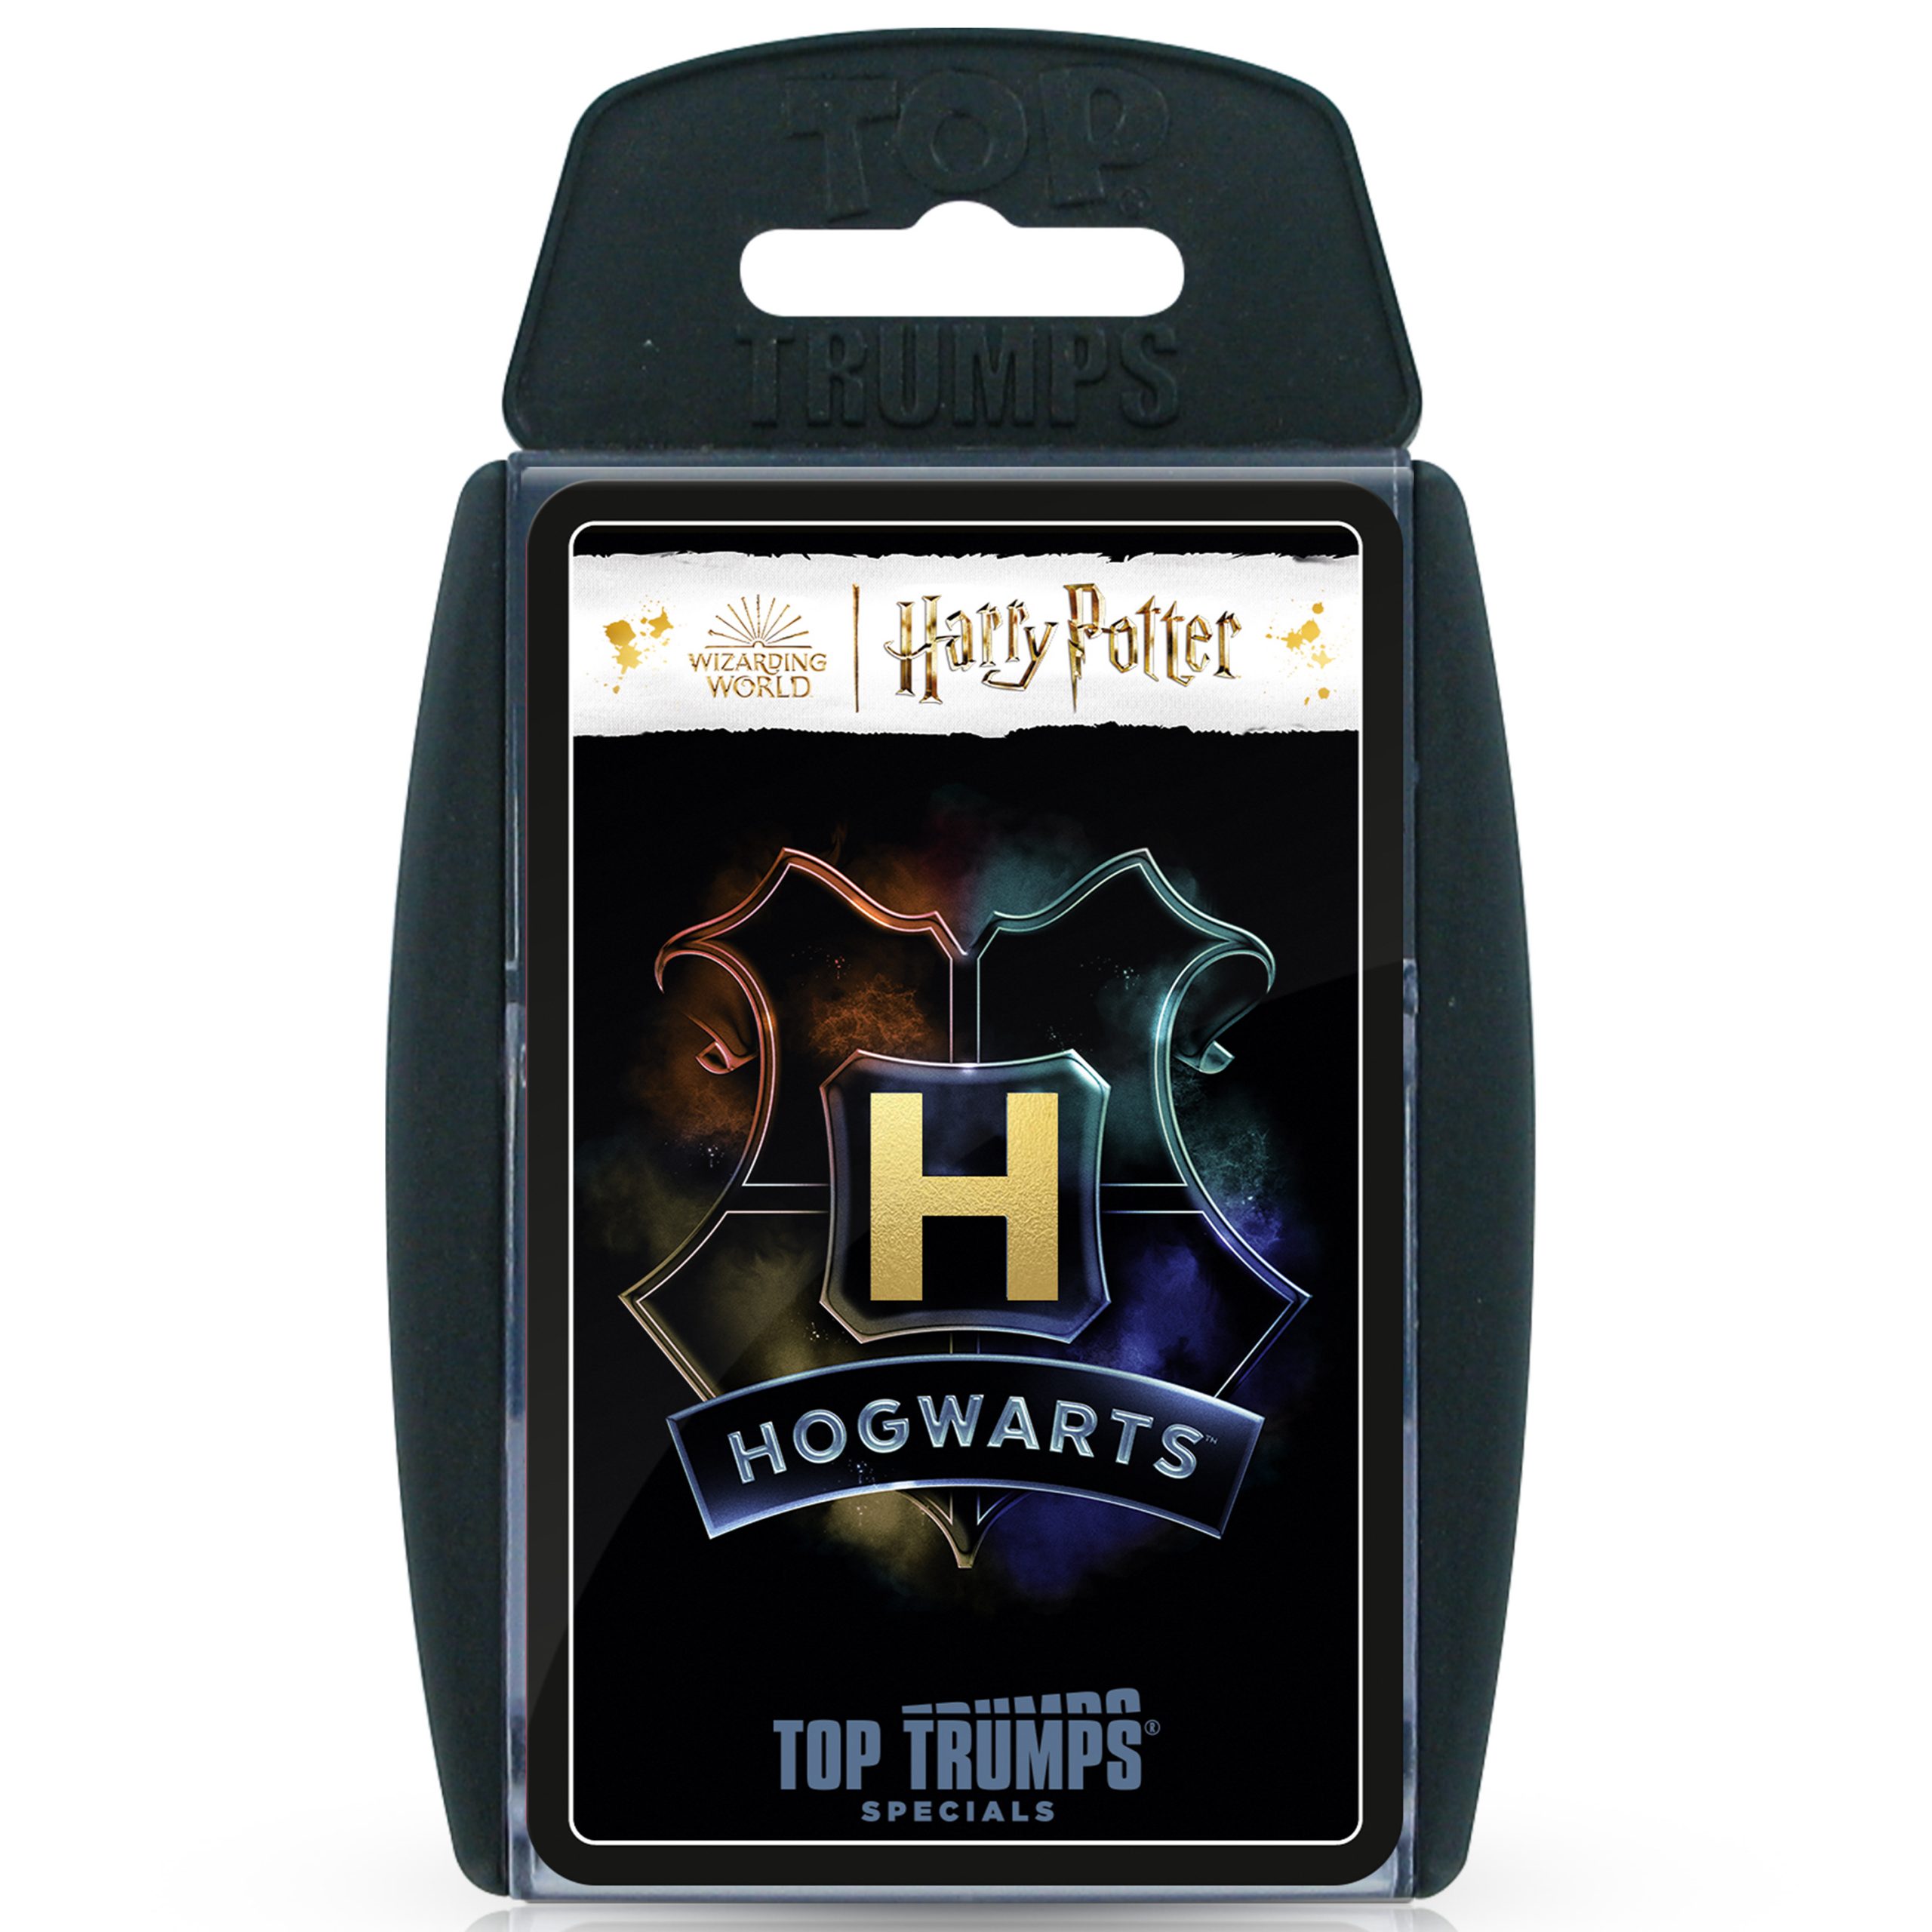 Harry Potter Heroes of Hogwarts Top Trumps